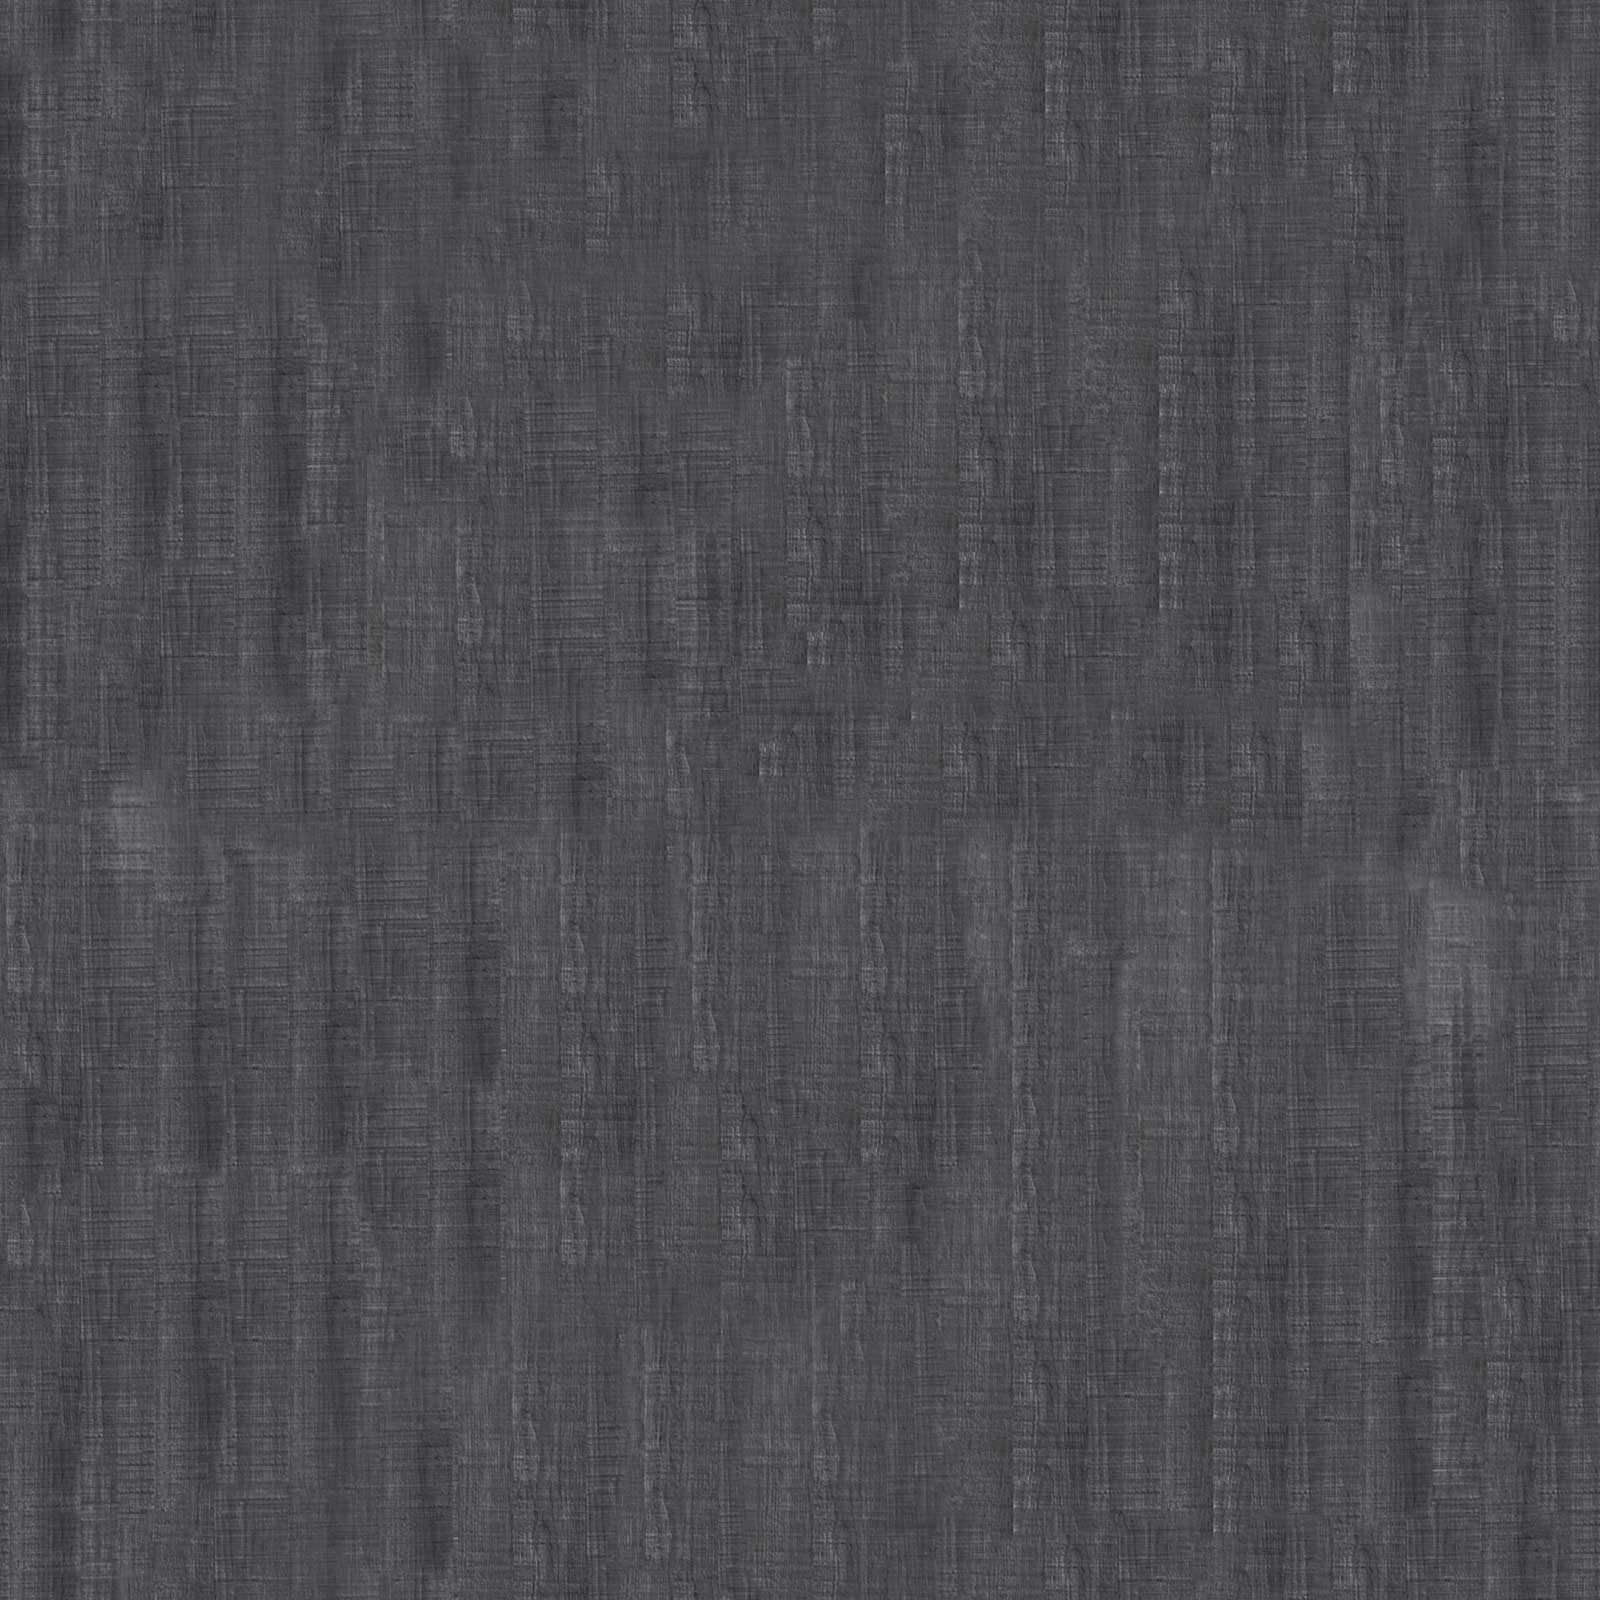 Werzalittischplatte Palissade grau